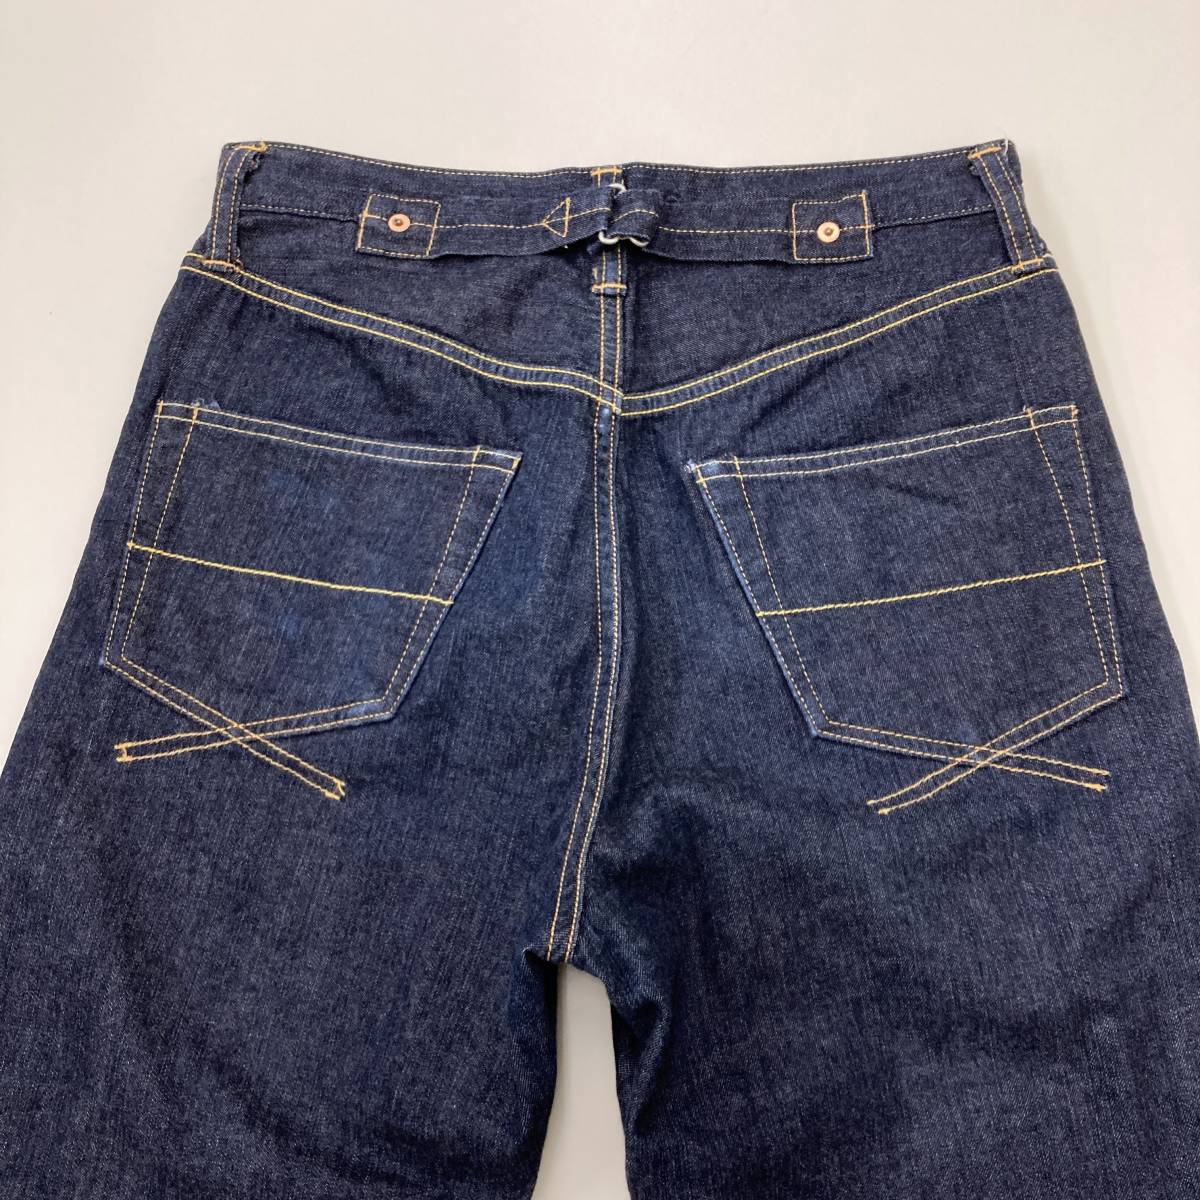 MIHARA YASUHIRO DENIM cropped pants Denim pants dark blue 44 size Mihara Yasuhiro monkey L jeans 3120188